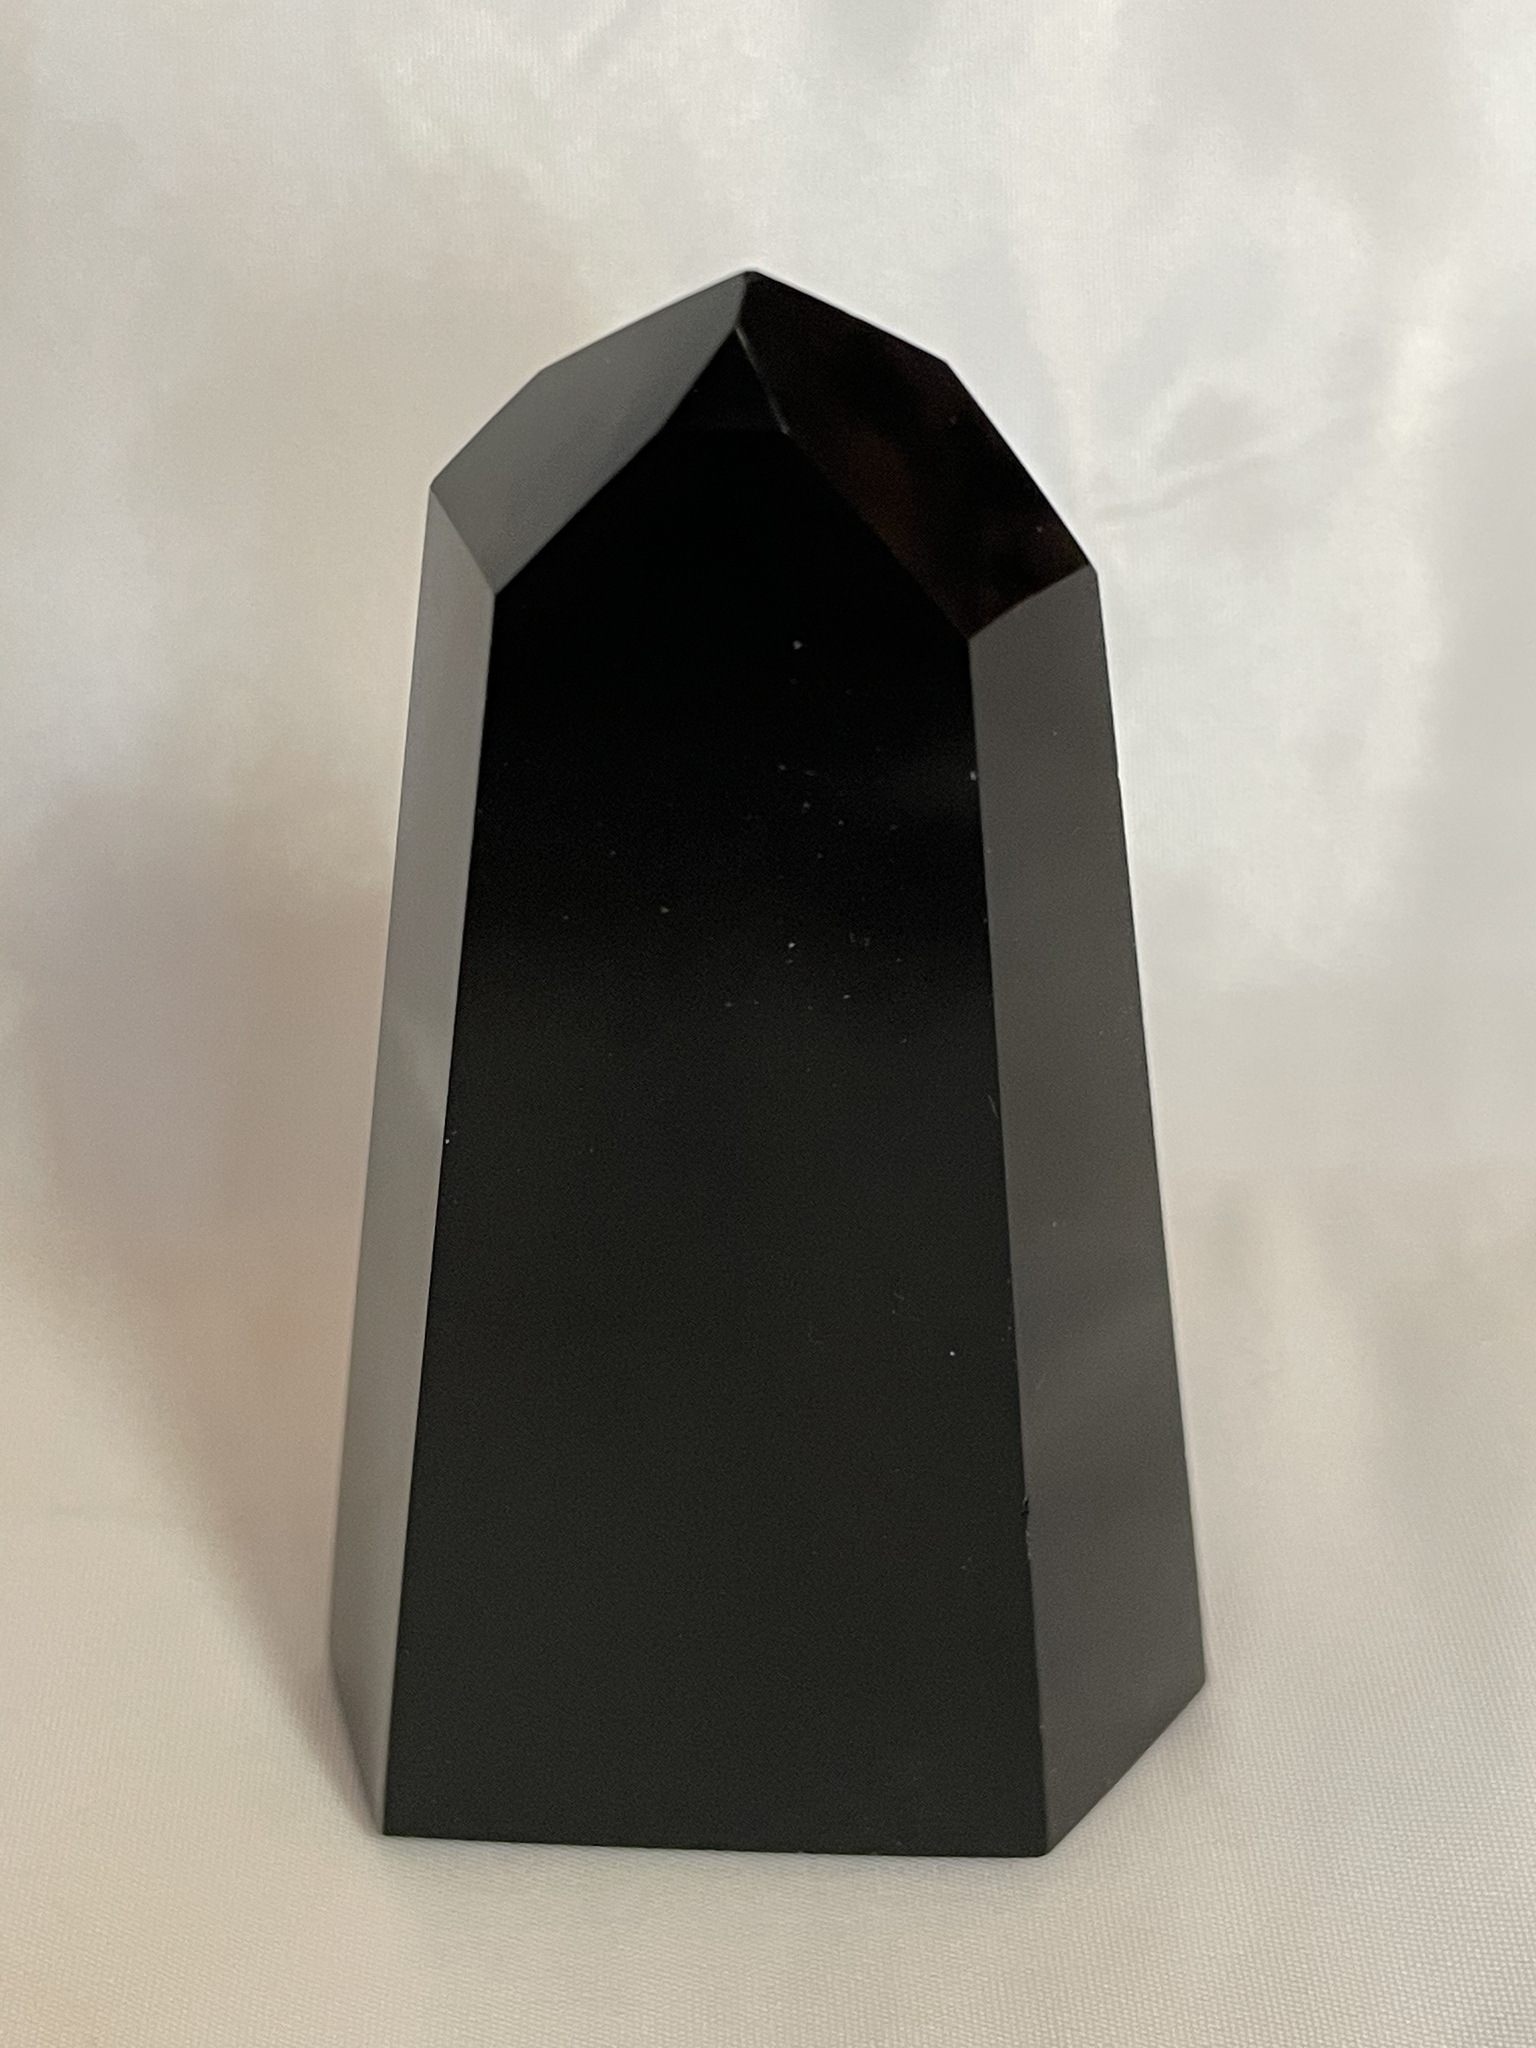 Torn i Svart Obsidian 7cm hög (88g)